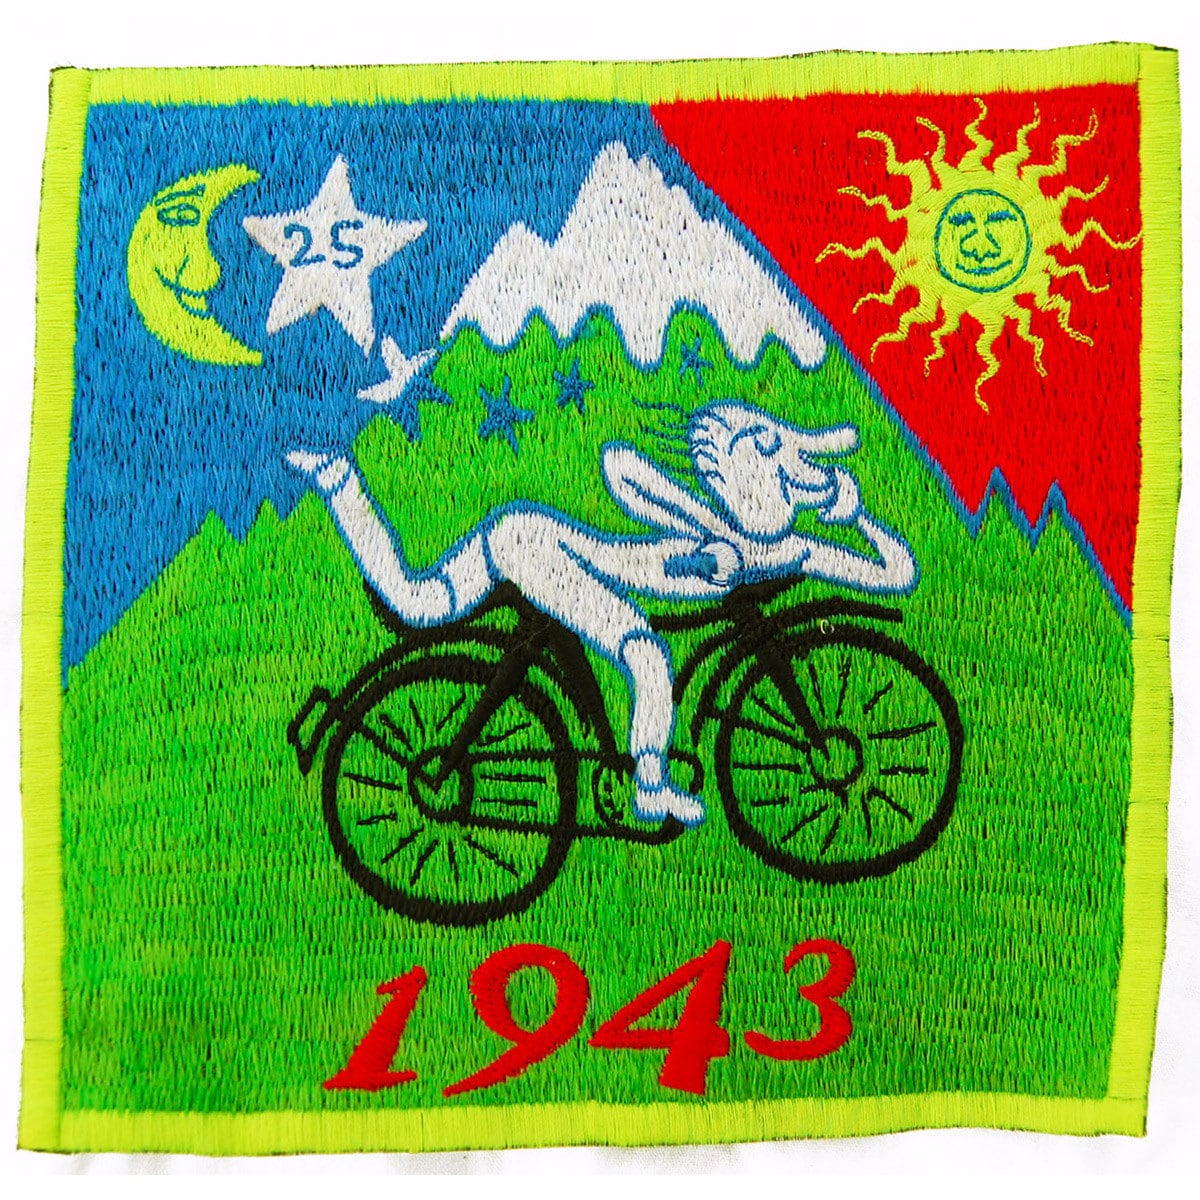 hofmann original bicycle day women top shirt psychedelic handmade no print goa t-shirt blacklight active